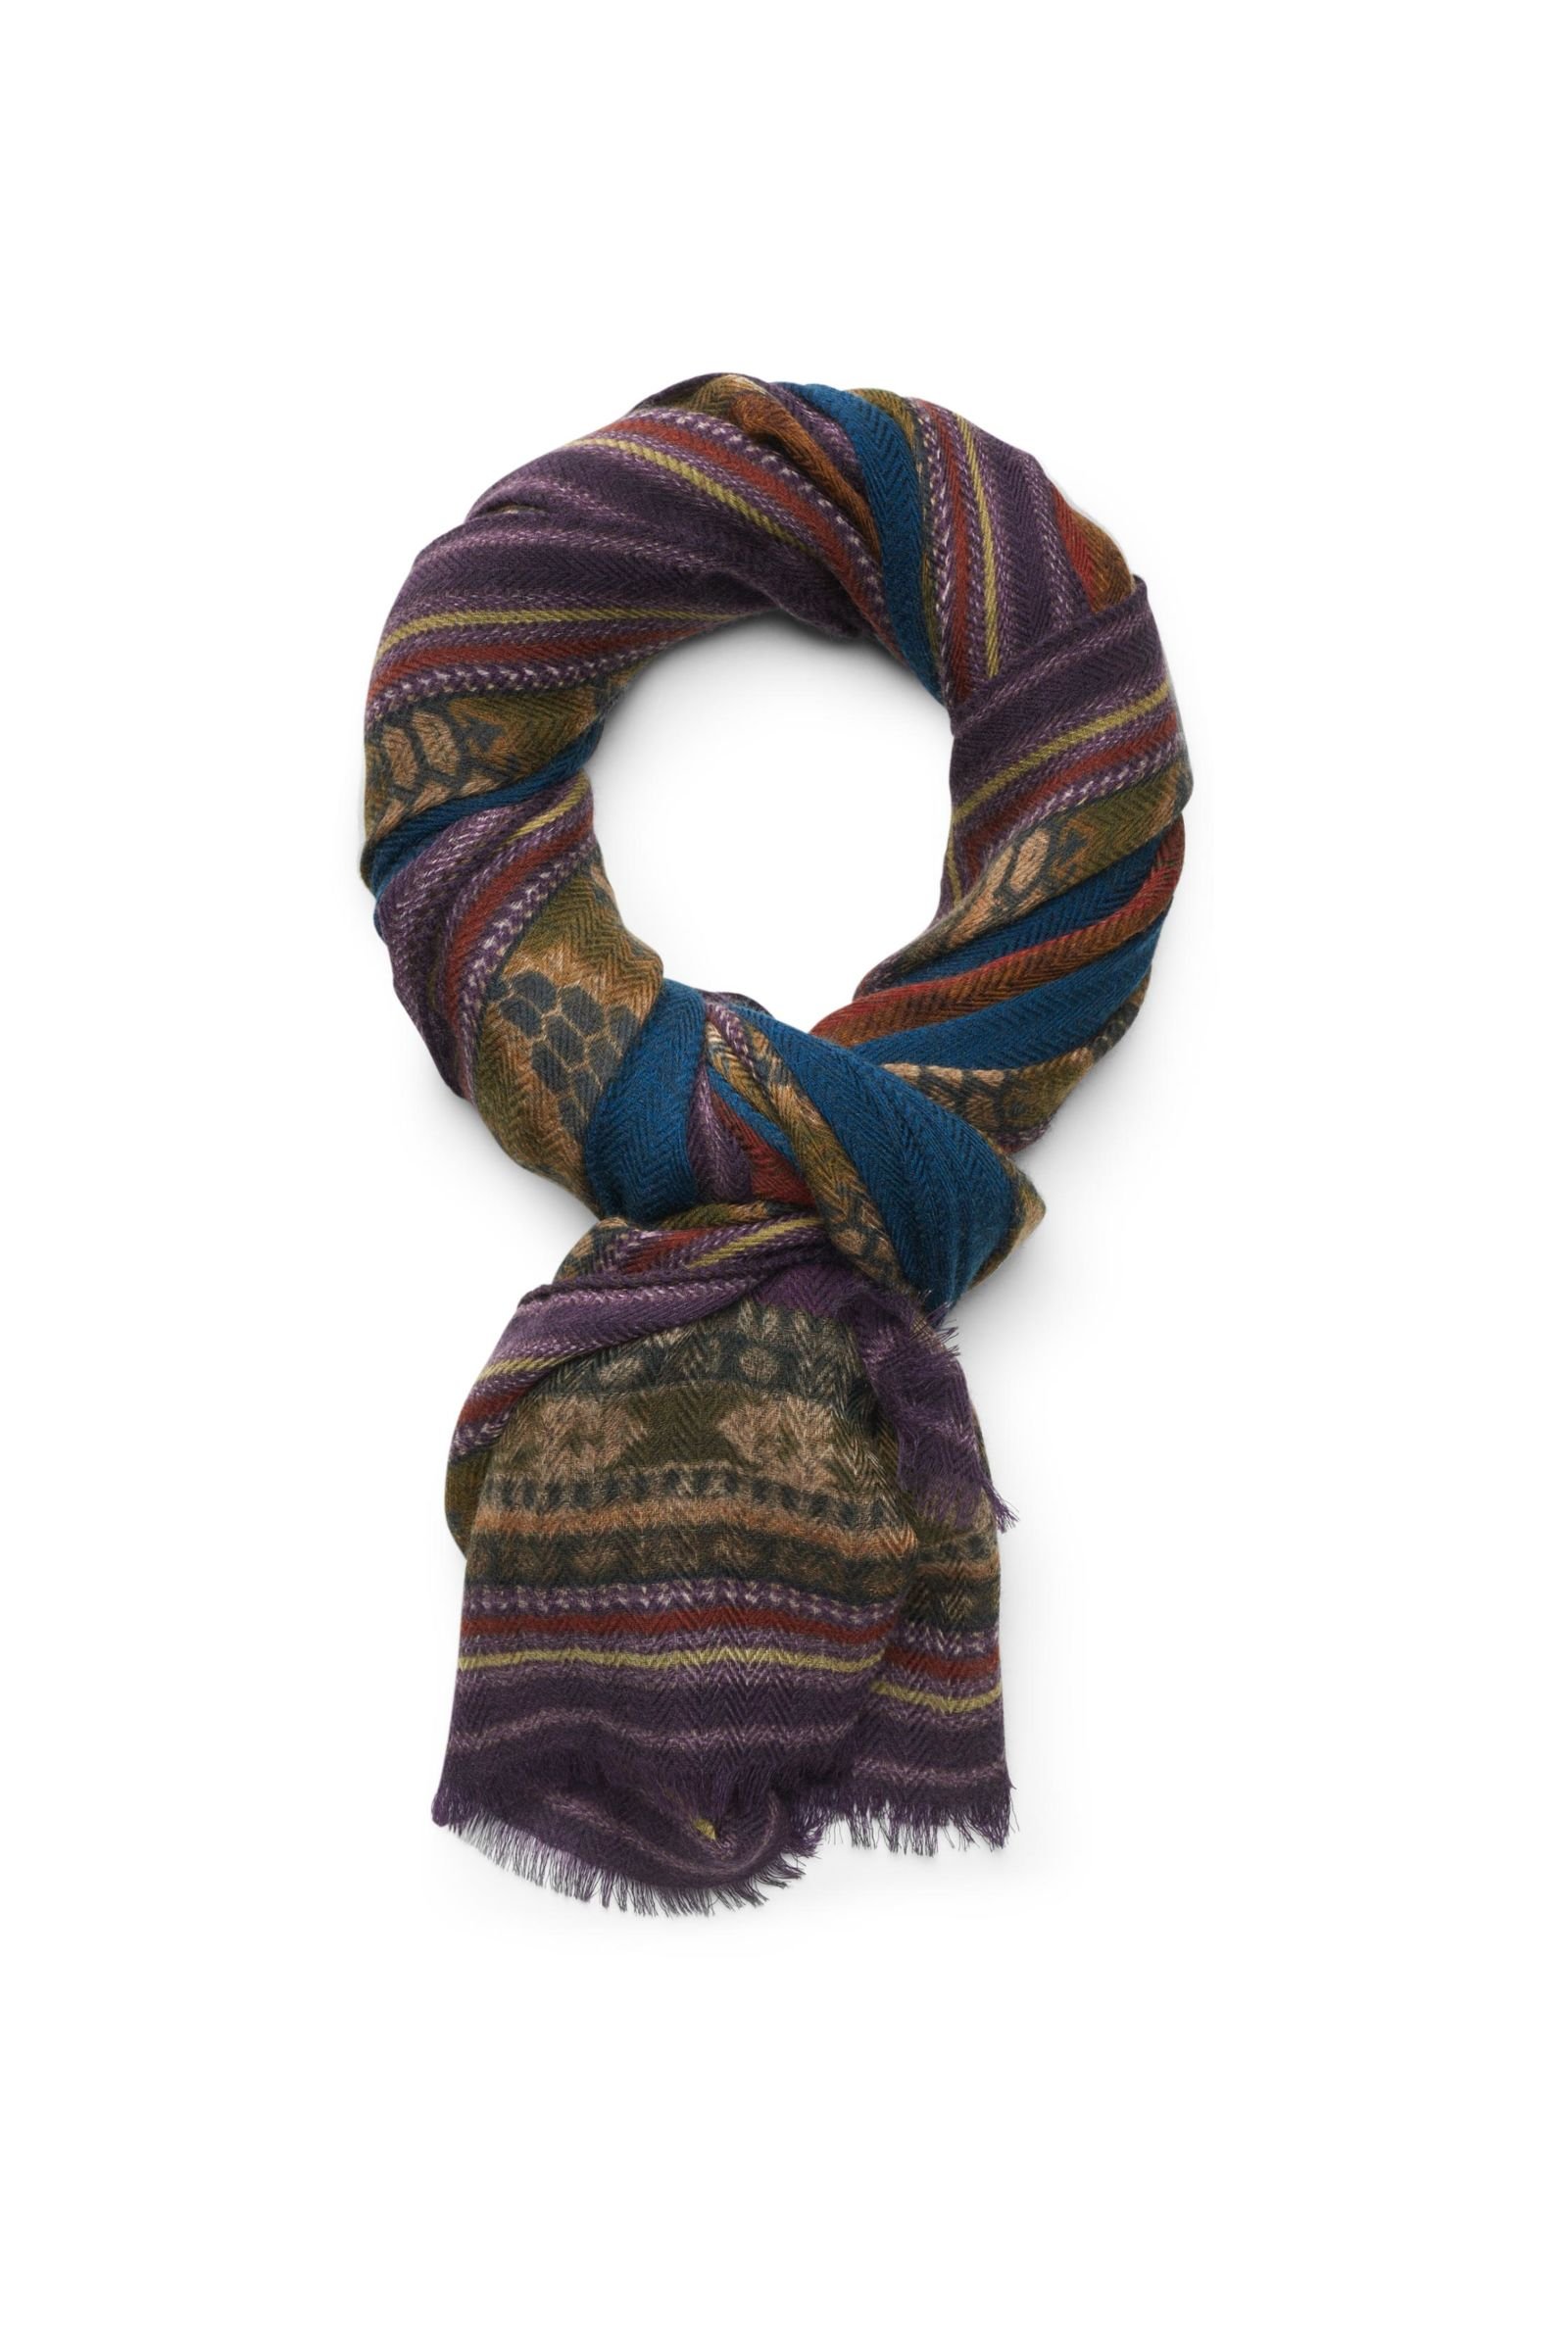 Cashmere scarf dark blue patterned